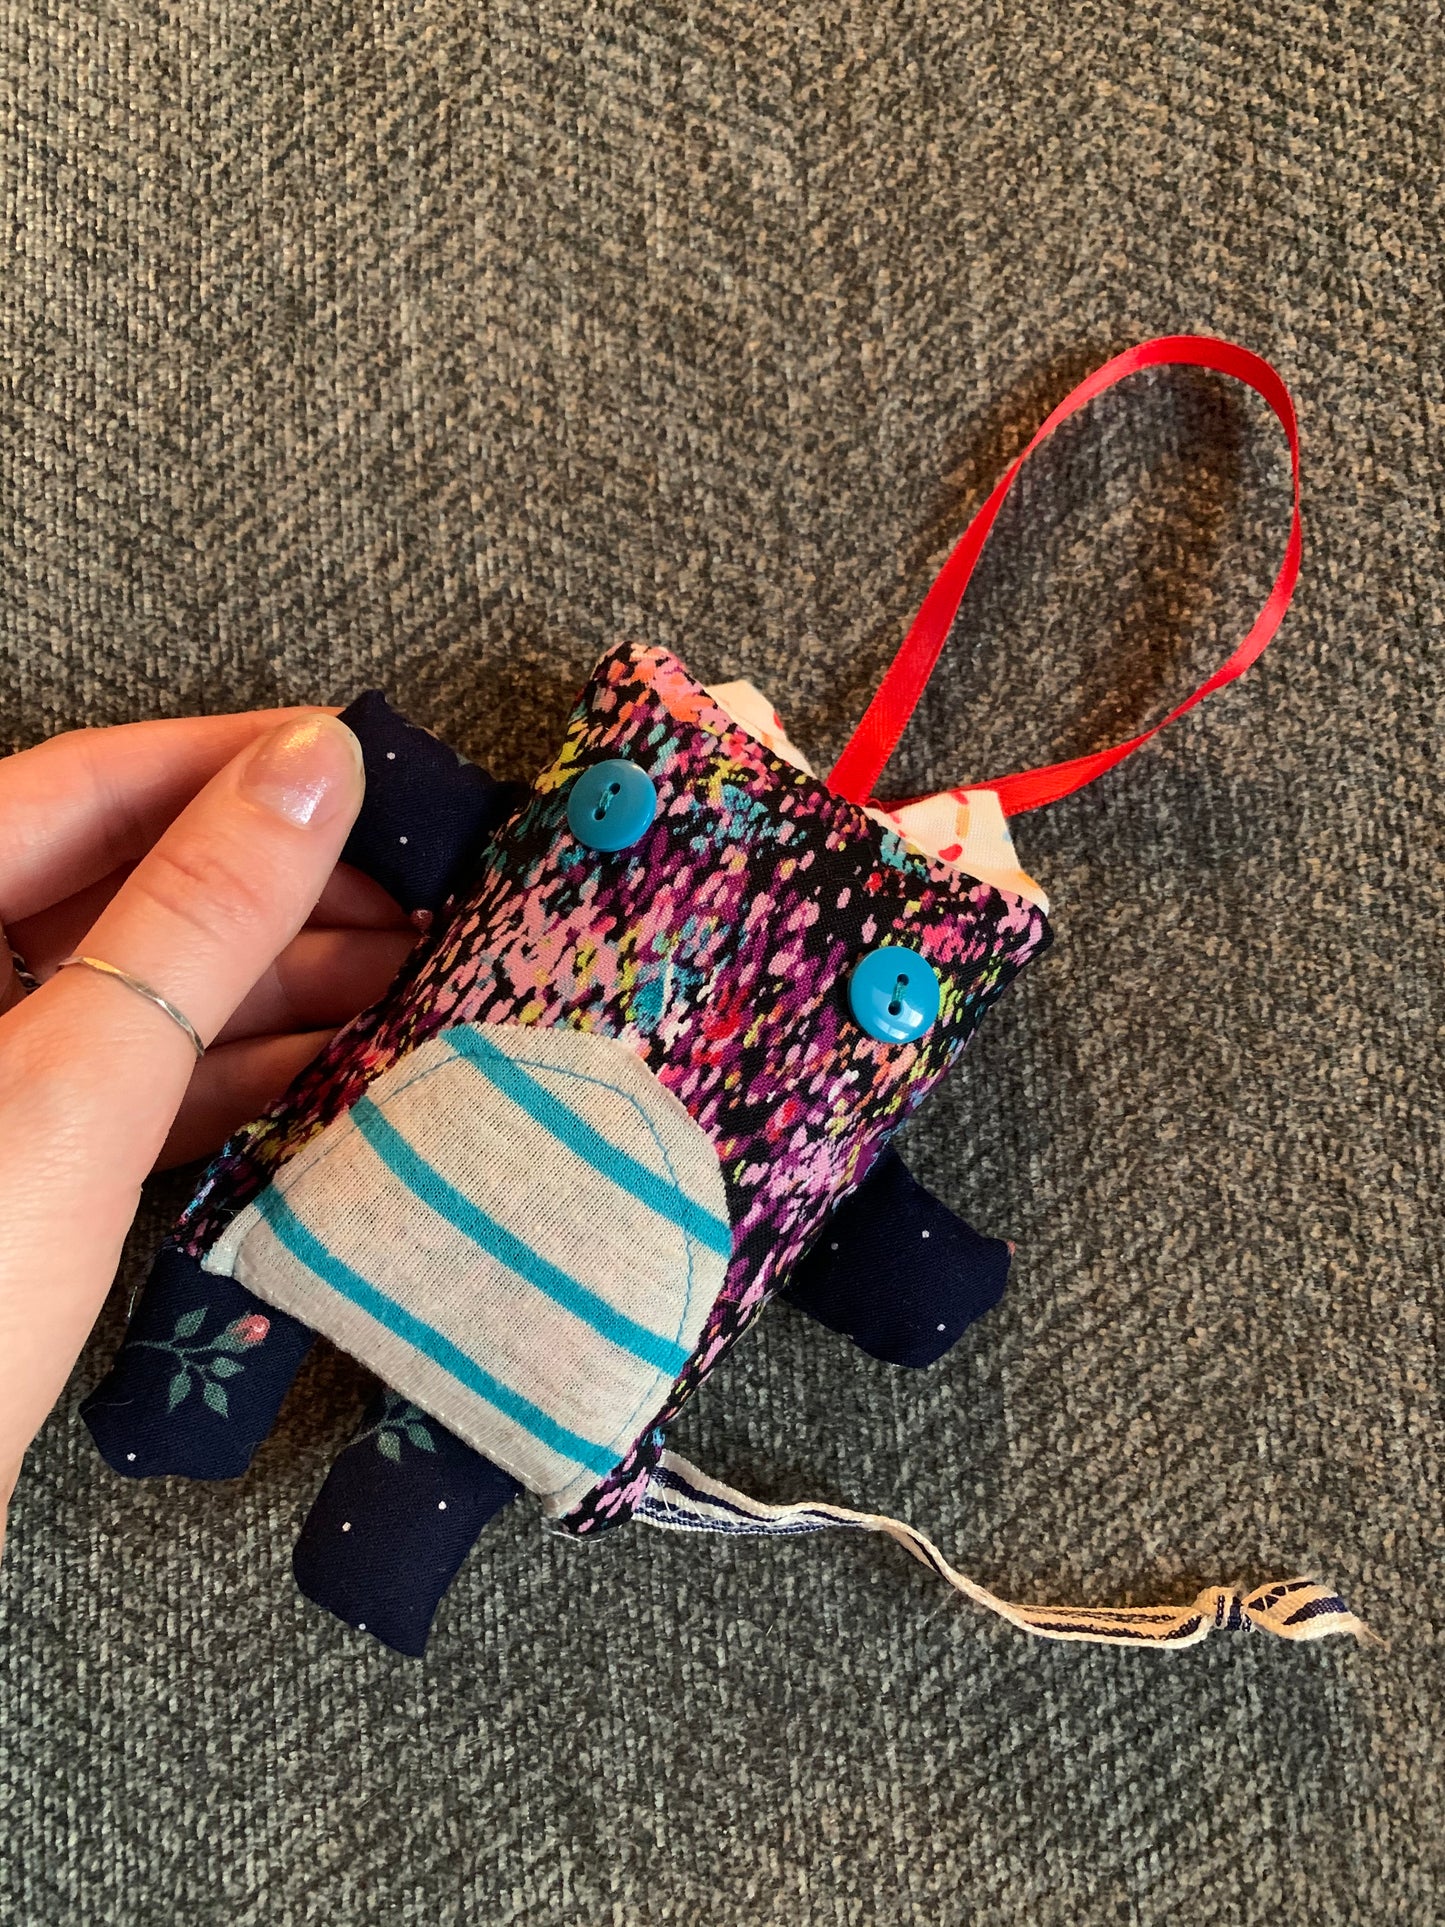 Mini Animal Friend - Kitty - Keychain, Ornament, Backpack Charm